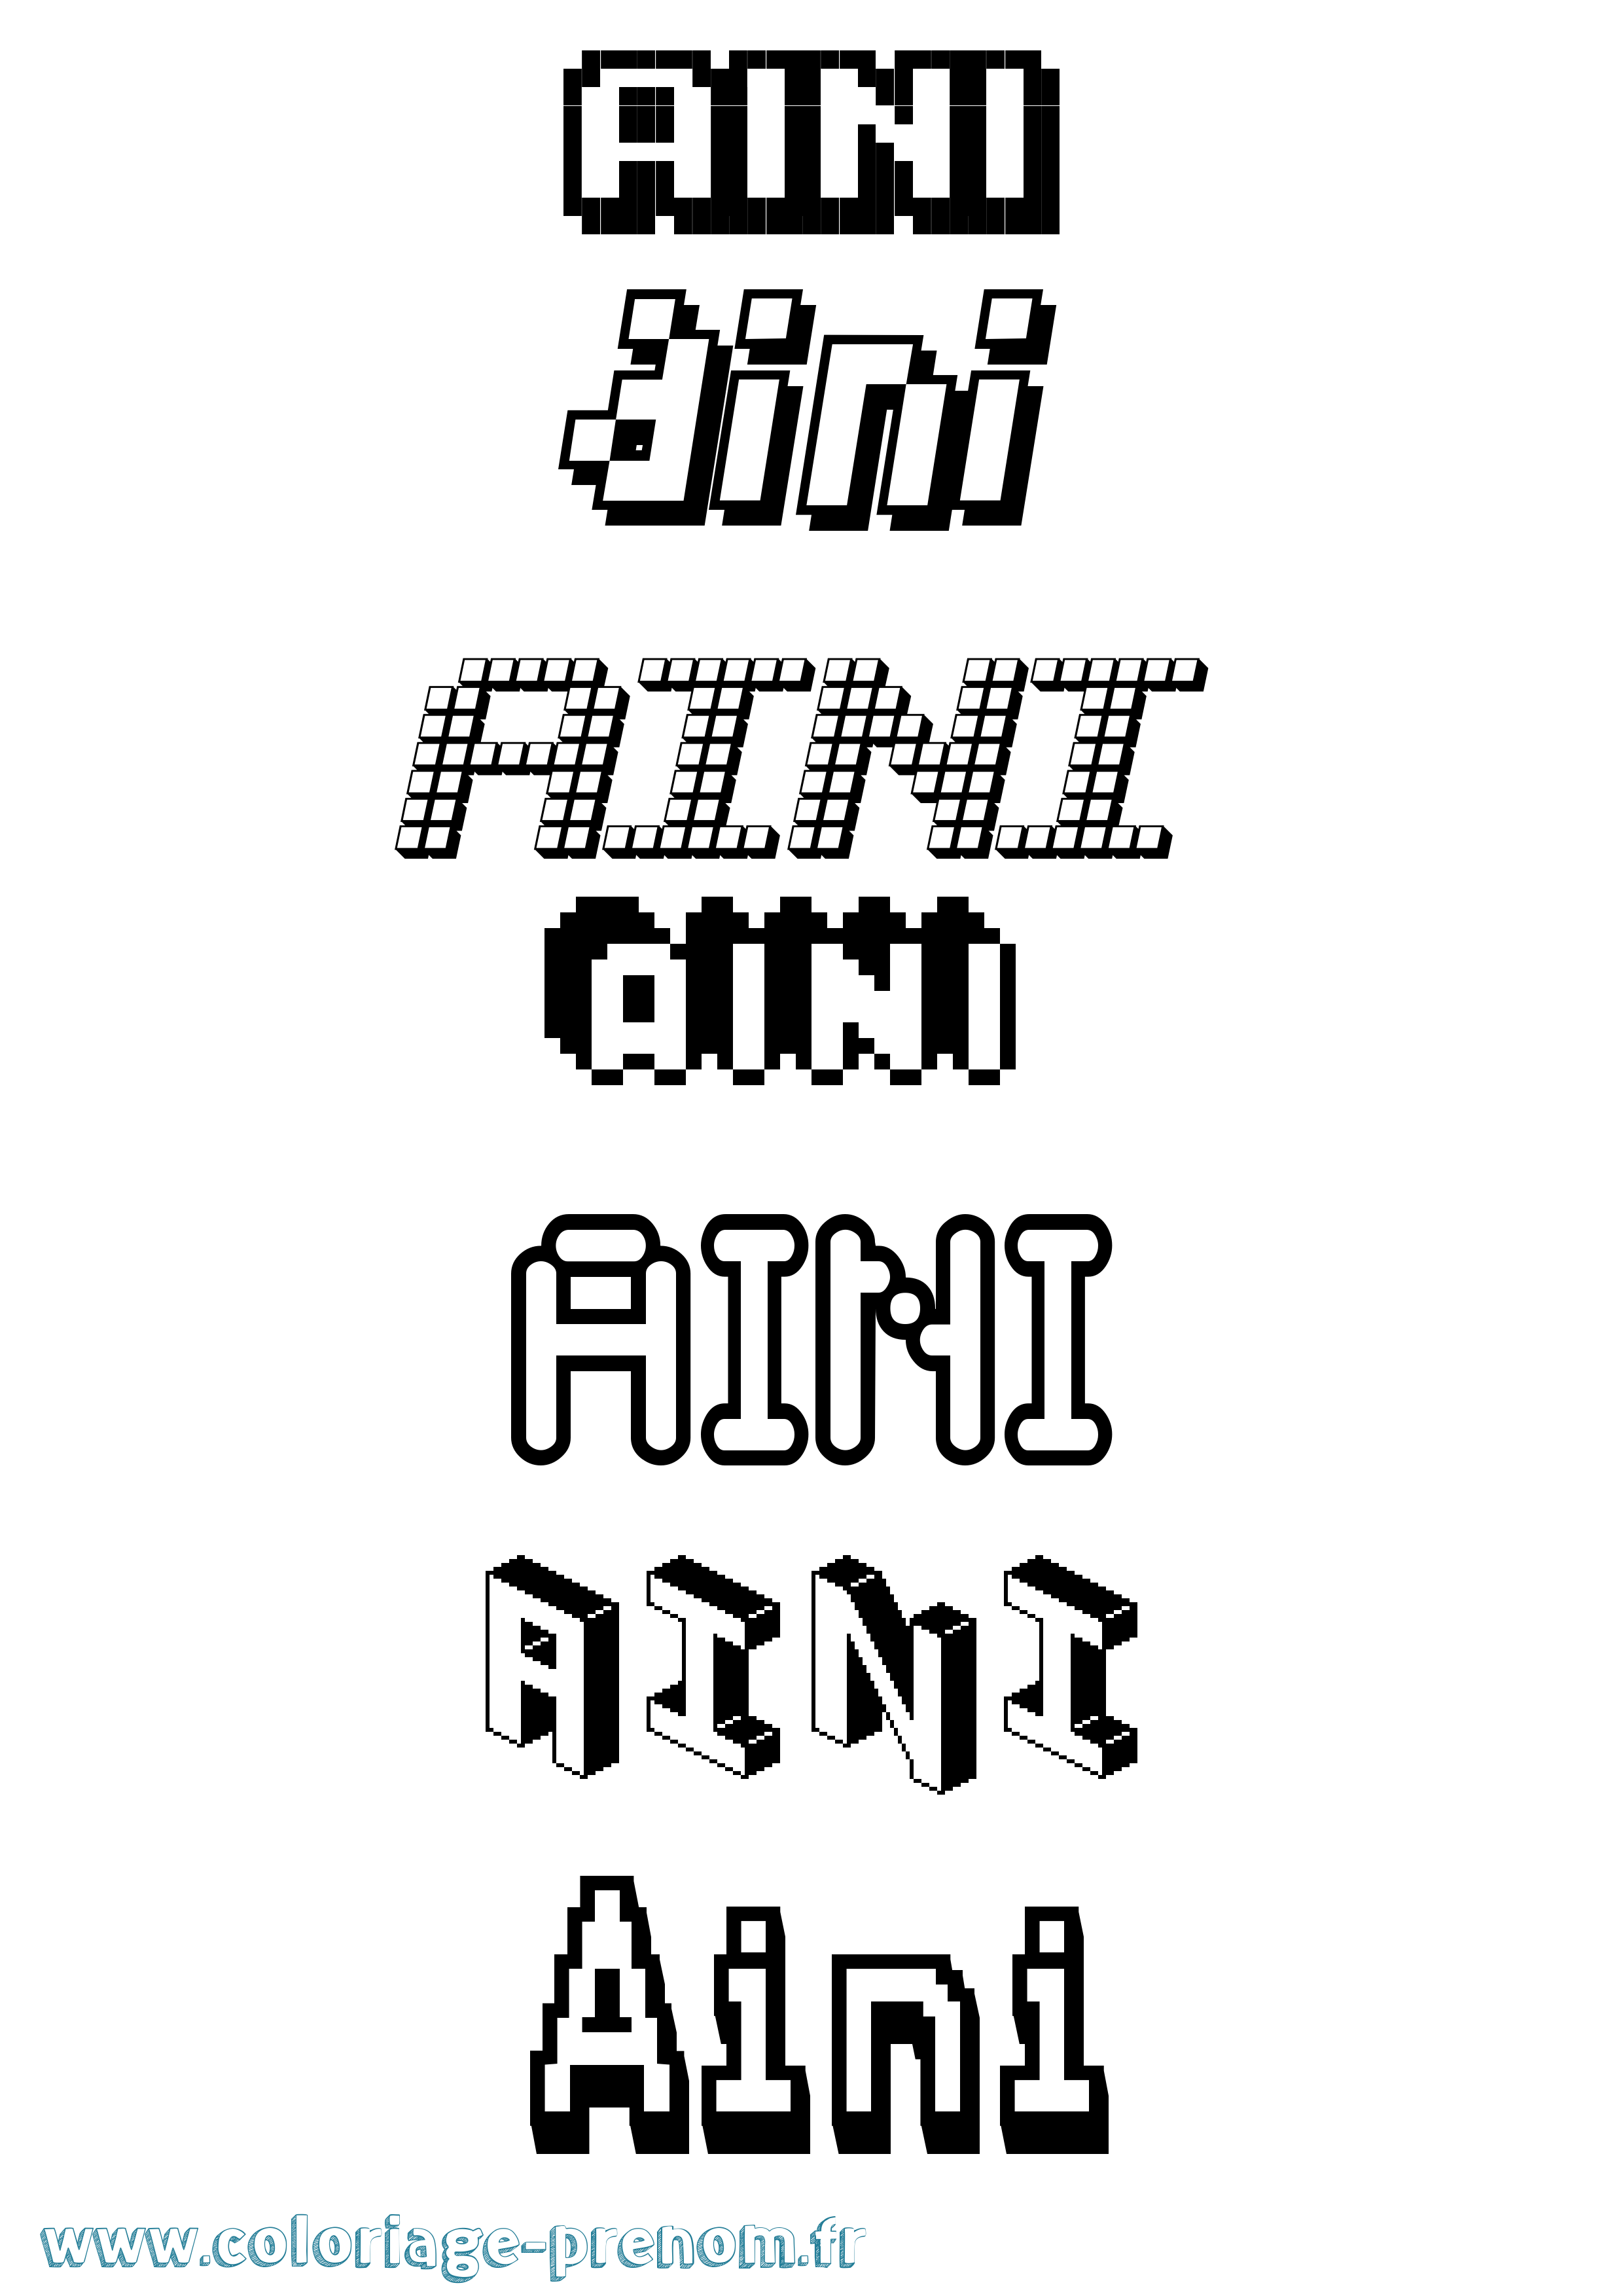 Coloriage prénom Aini Pixel